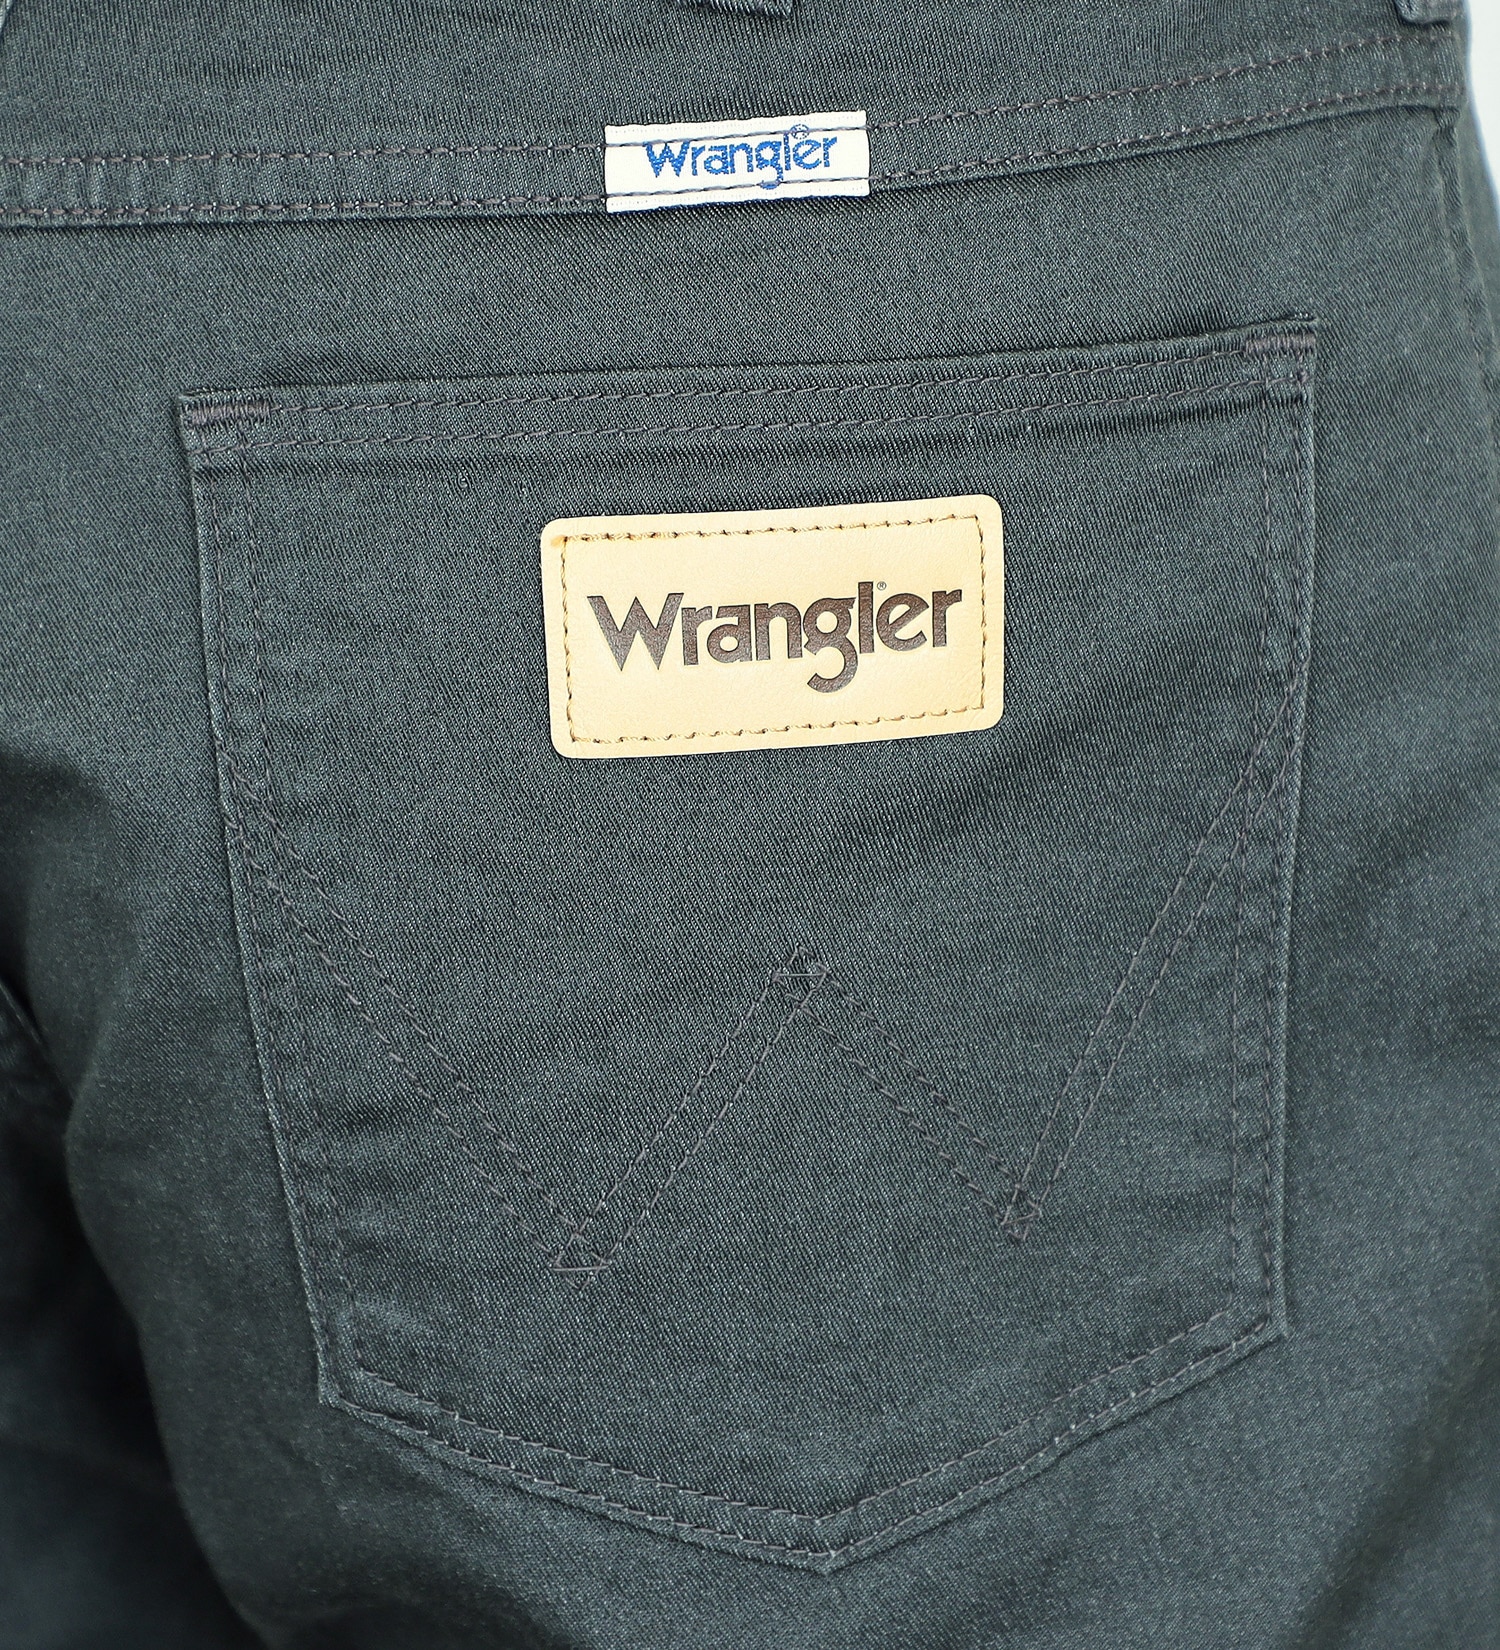 Wrangler(ラングラー)の365日快適　ストレッチ ストレートパンツ|パンツ/パンツ/メンズ|チャコールグレー